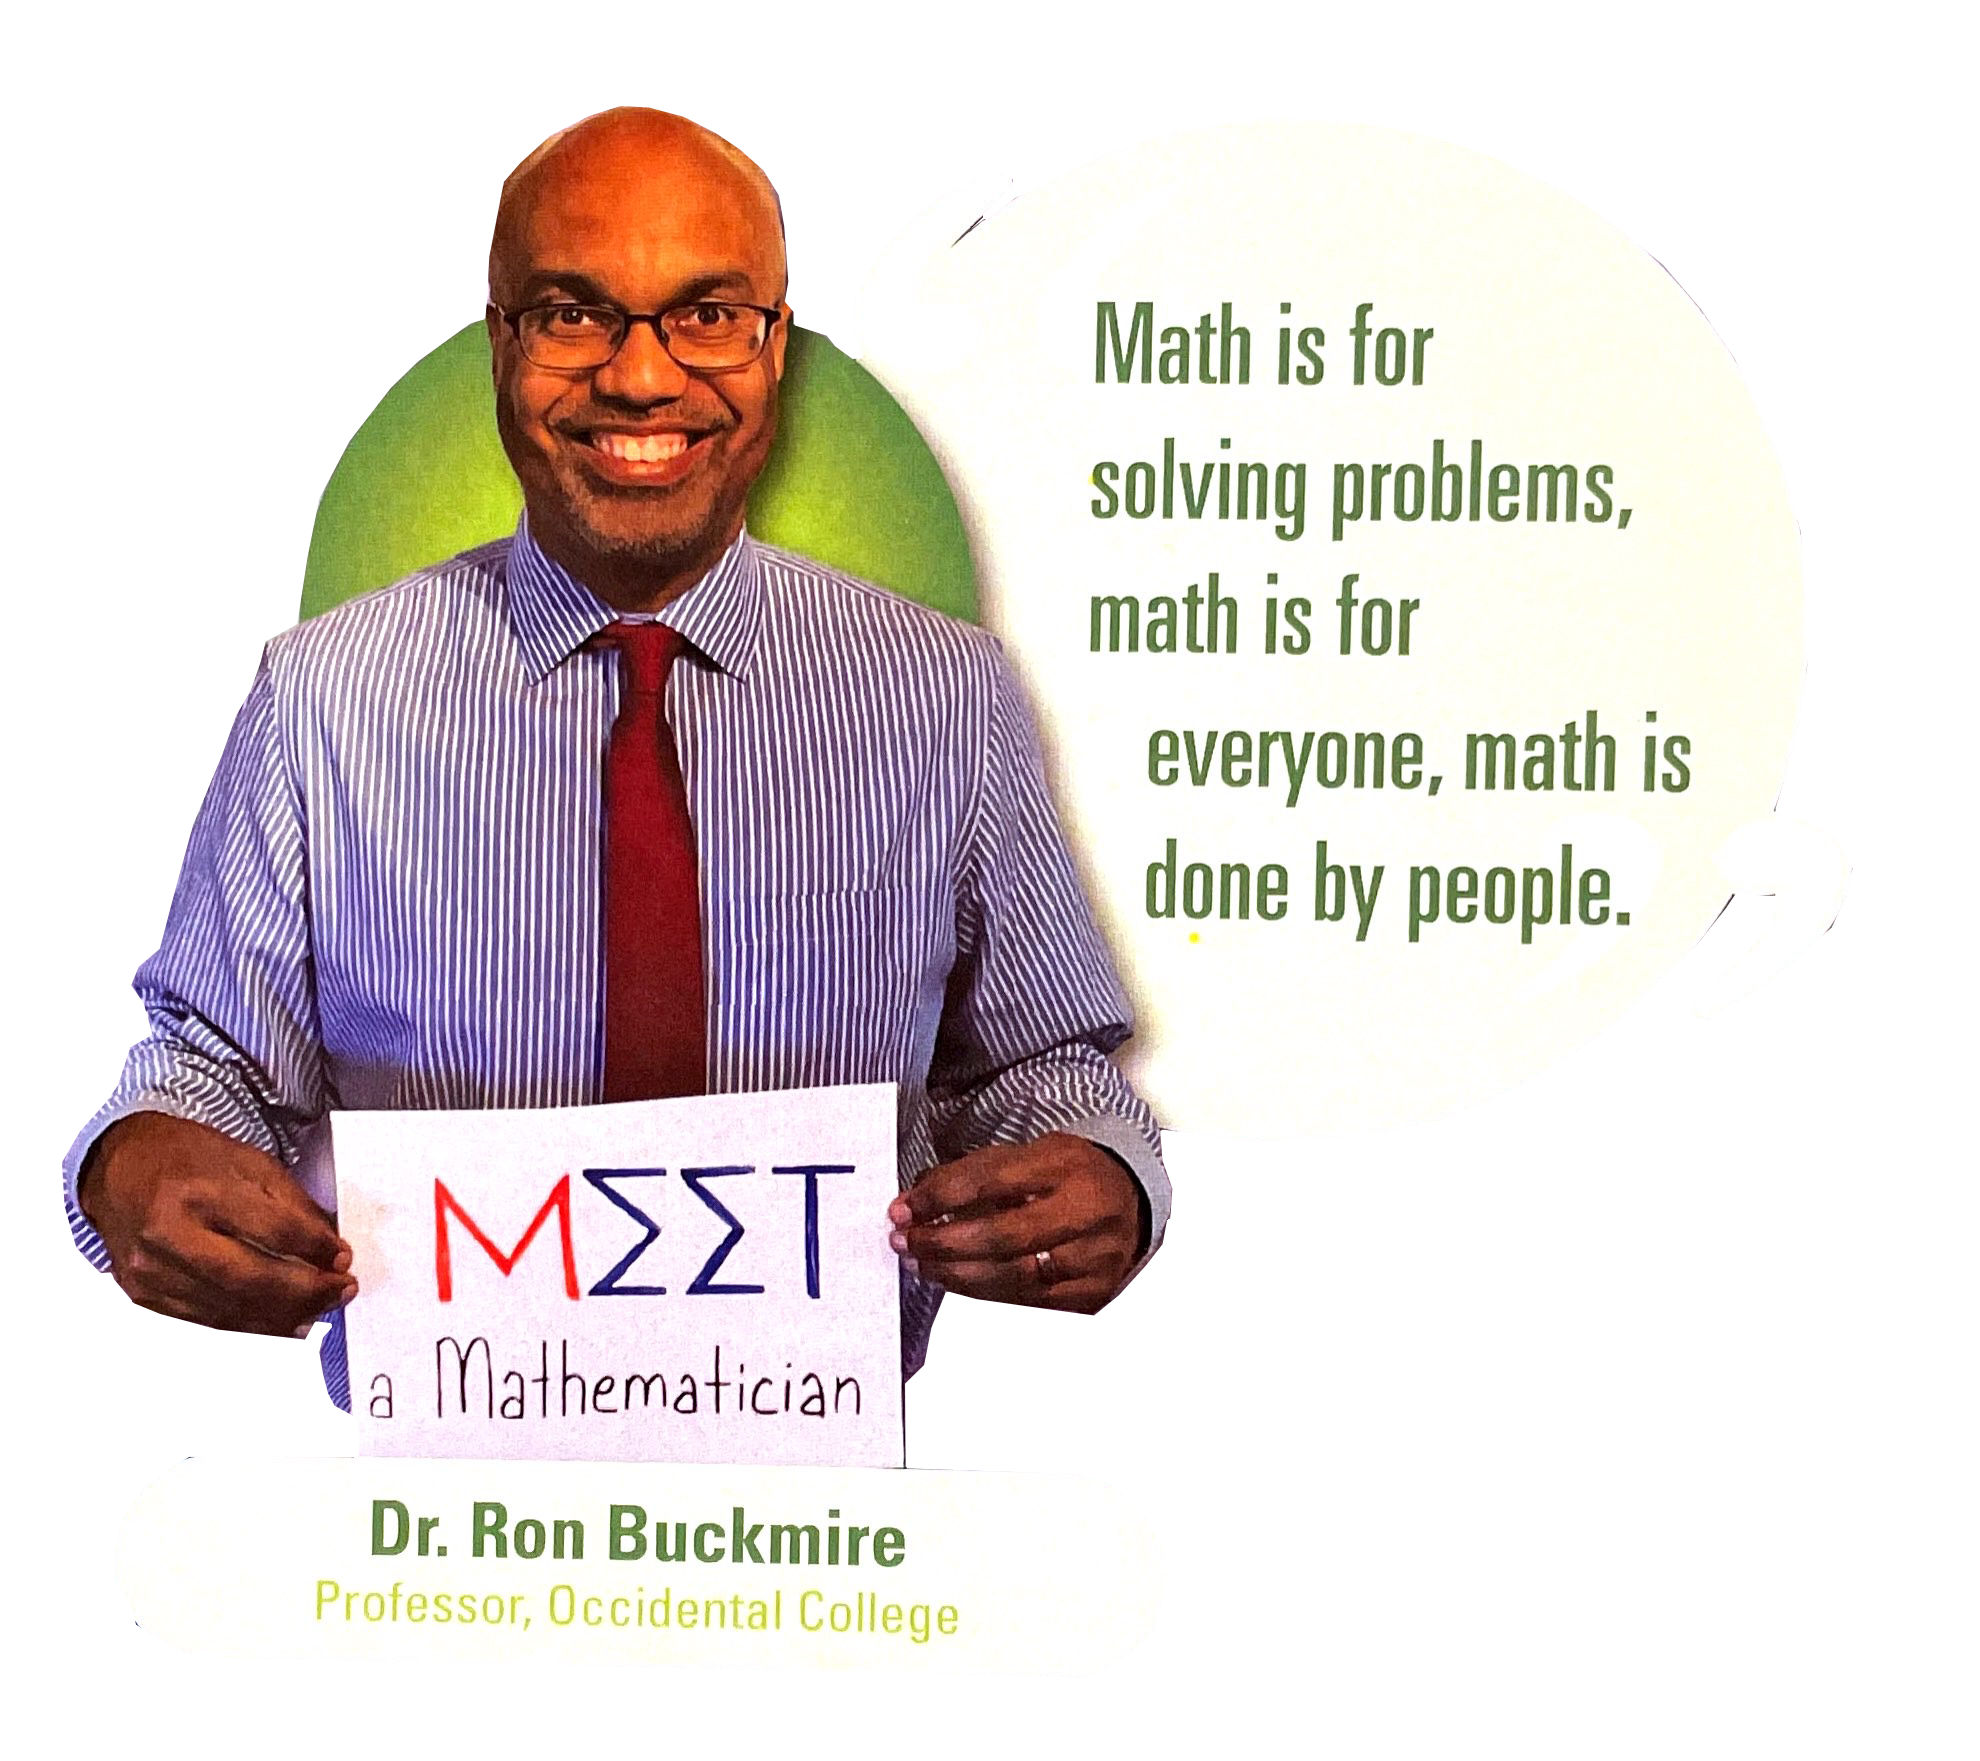 Spotlight: Meet a Mathematician - Dr. Ron Buckmire, Professor, Occidental College. "Math is for solving problems, math is for everyone, math is done by people."